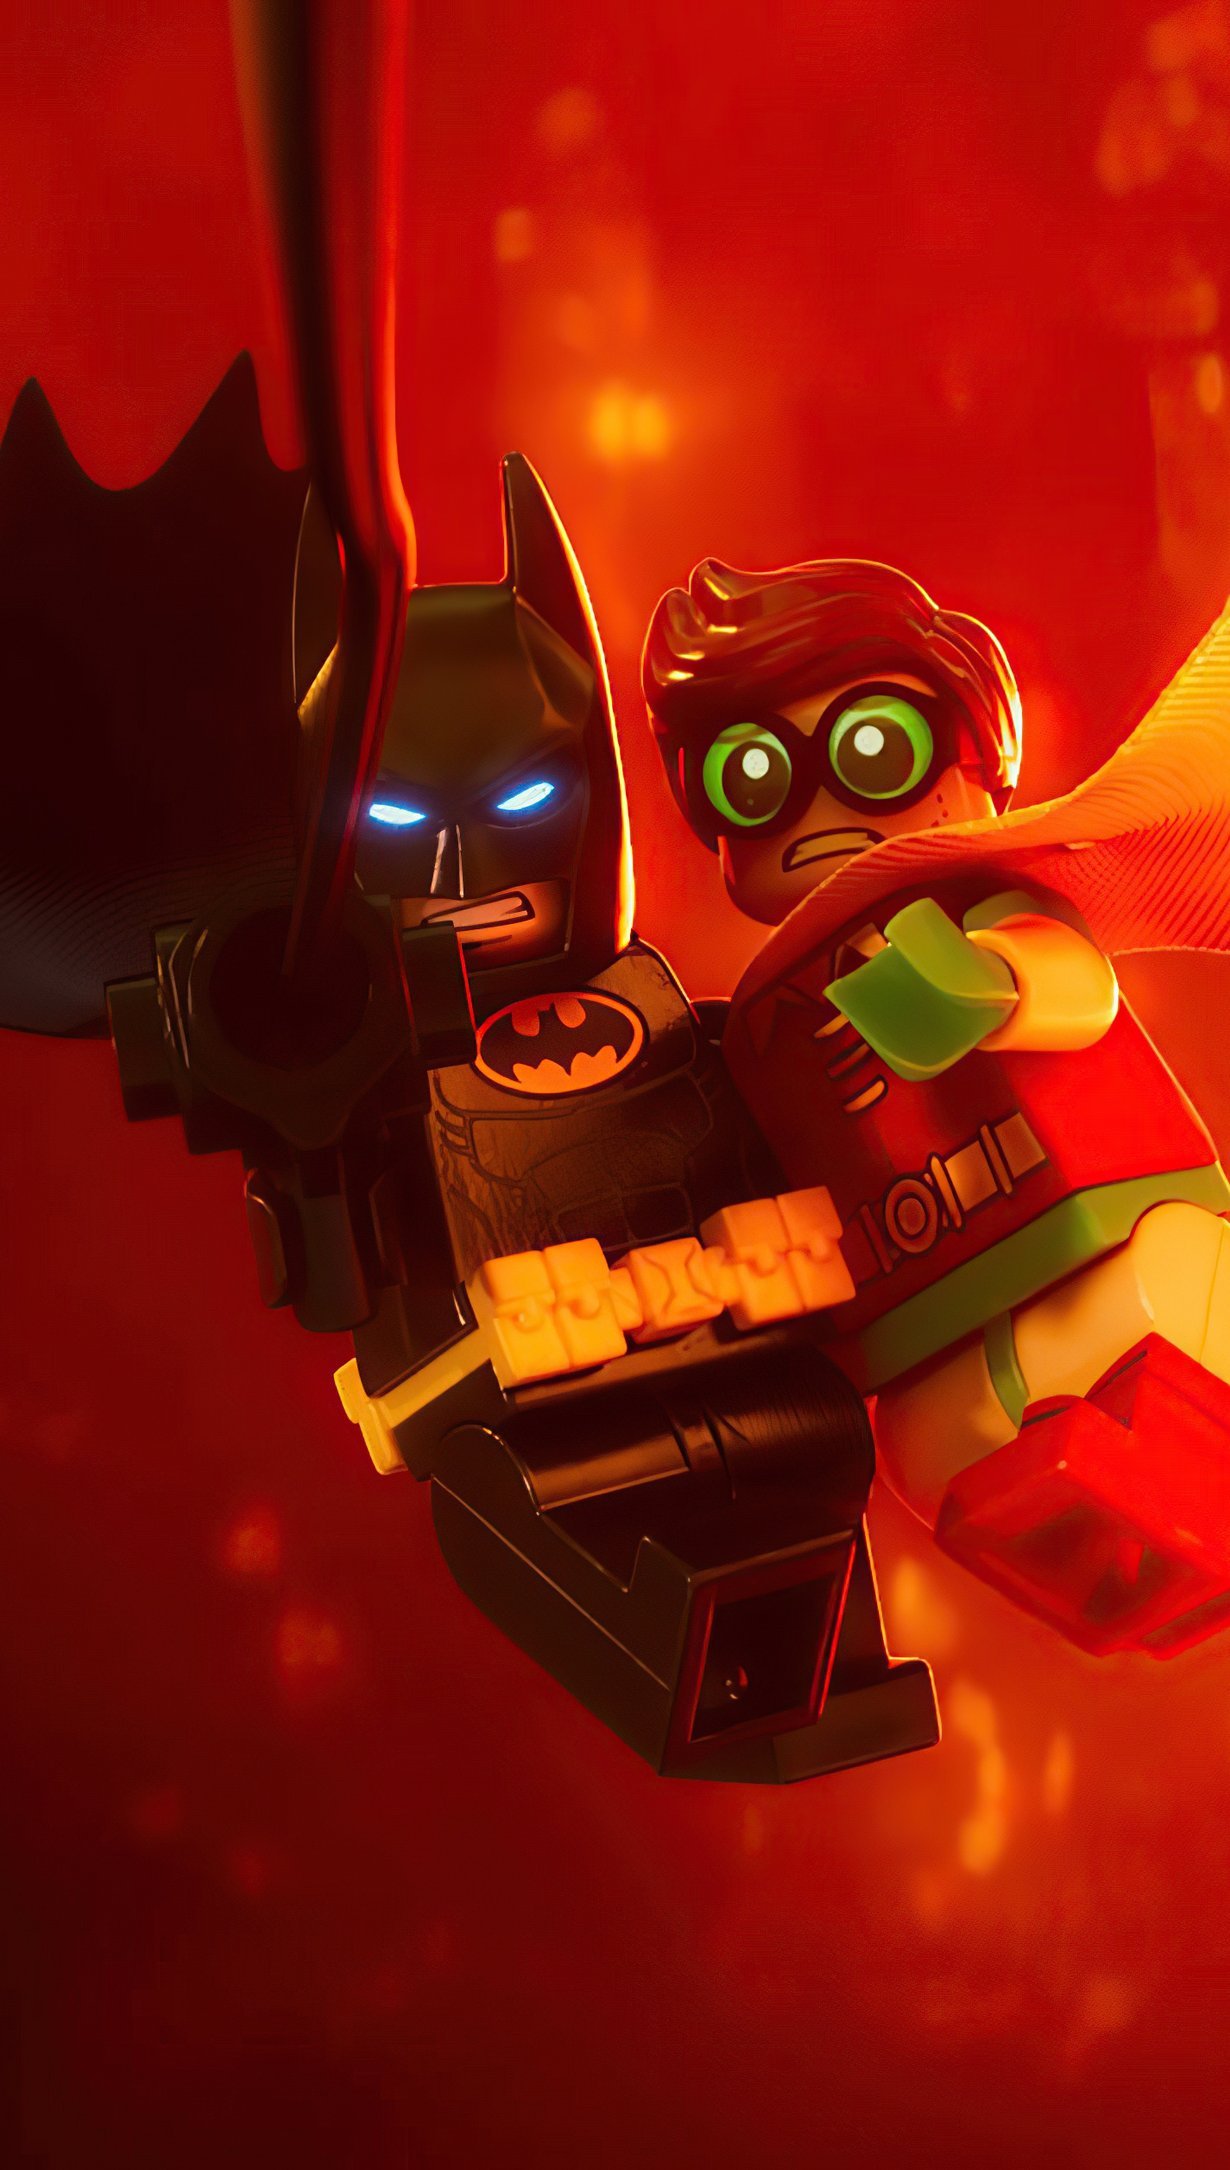 Wallpaper Batman and Robin Lego style Vertical